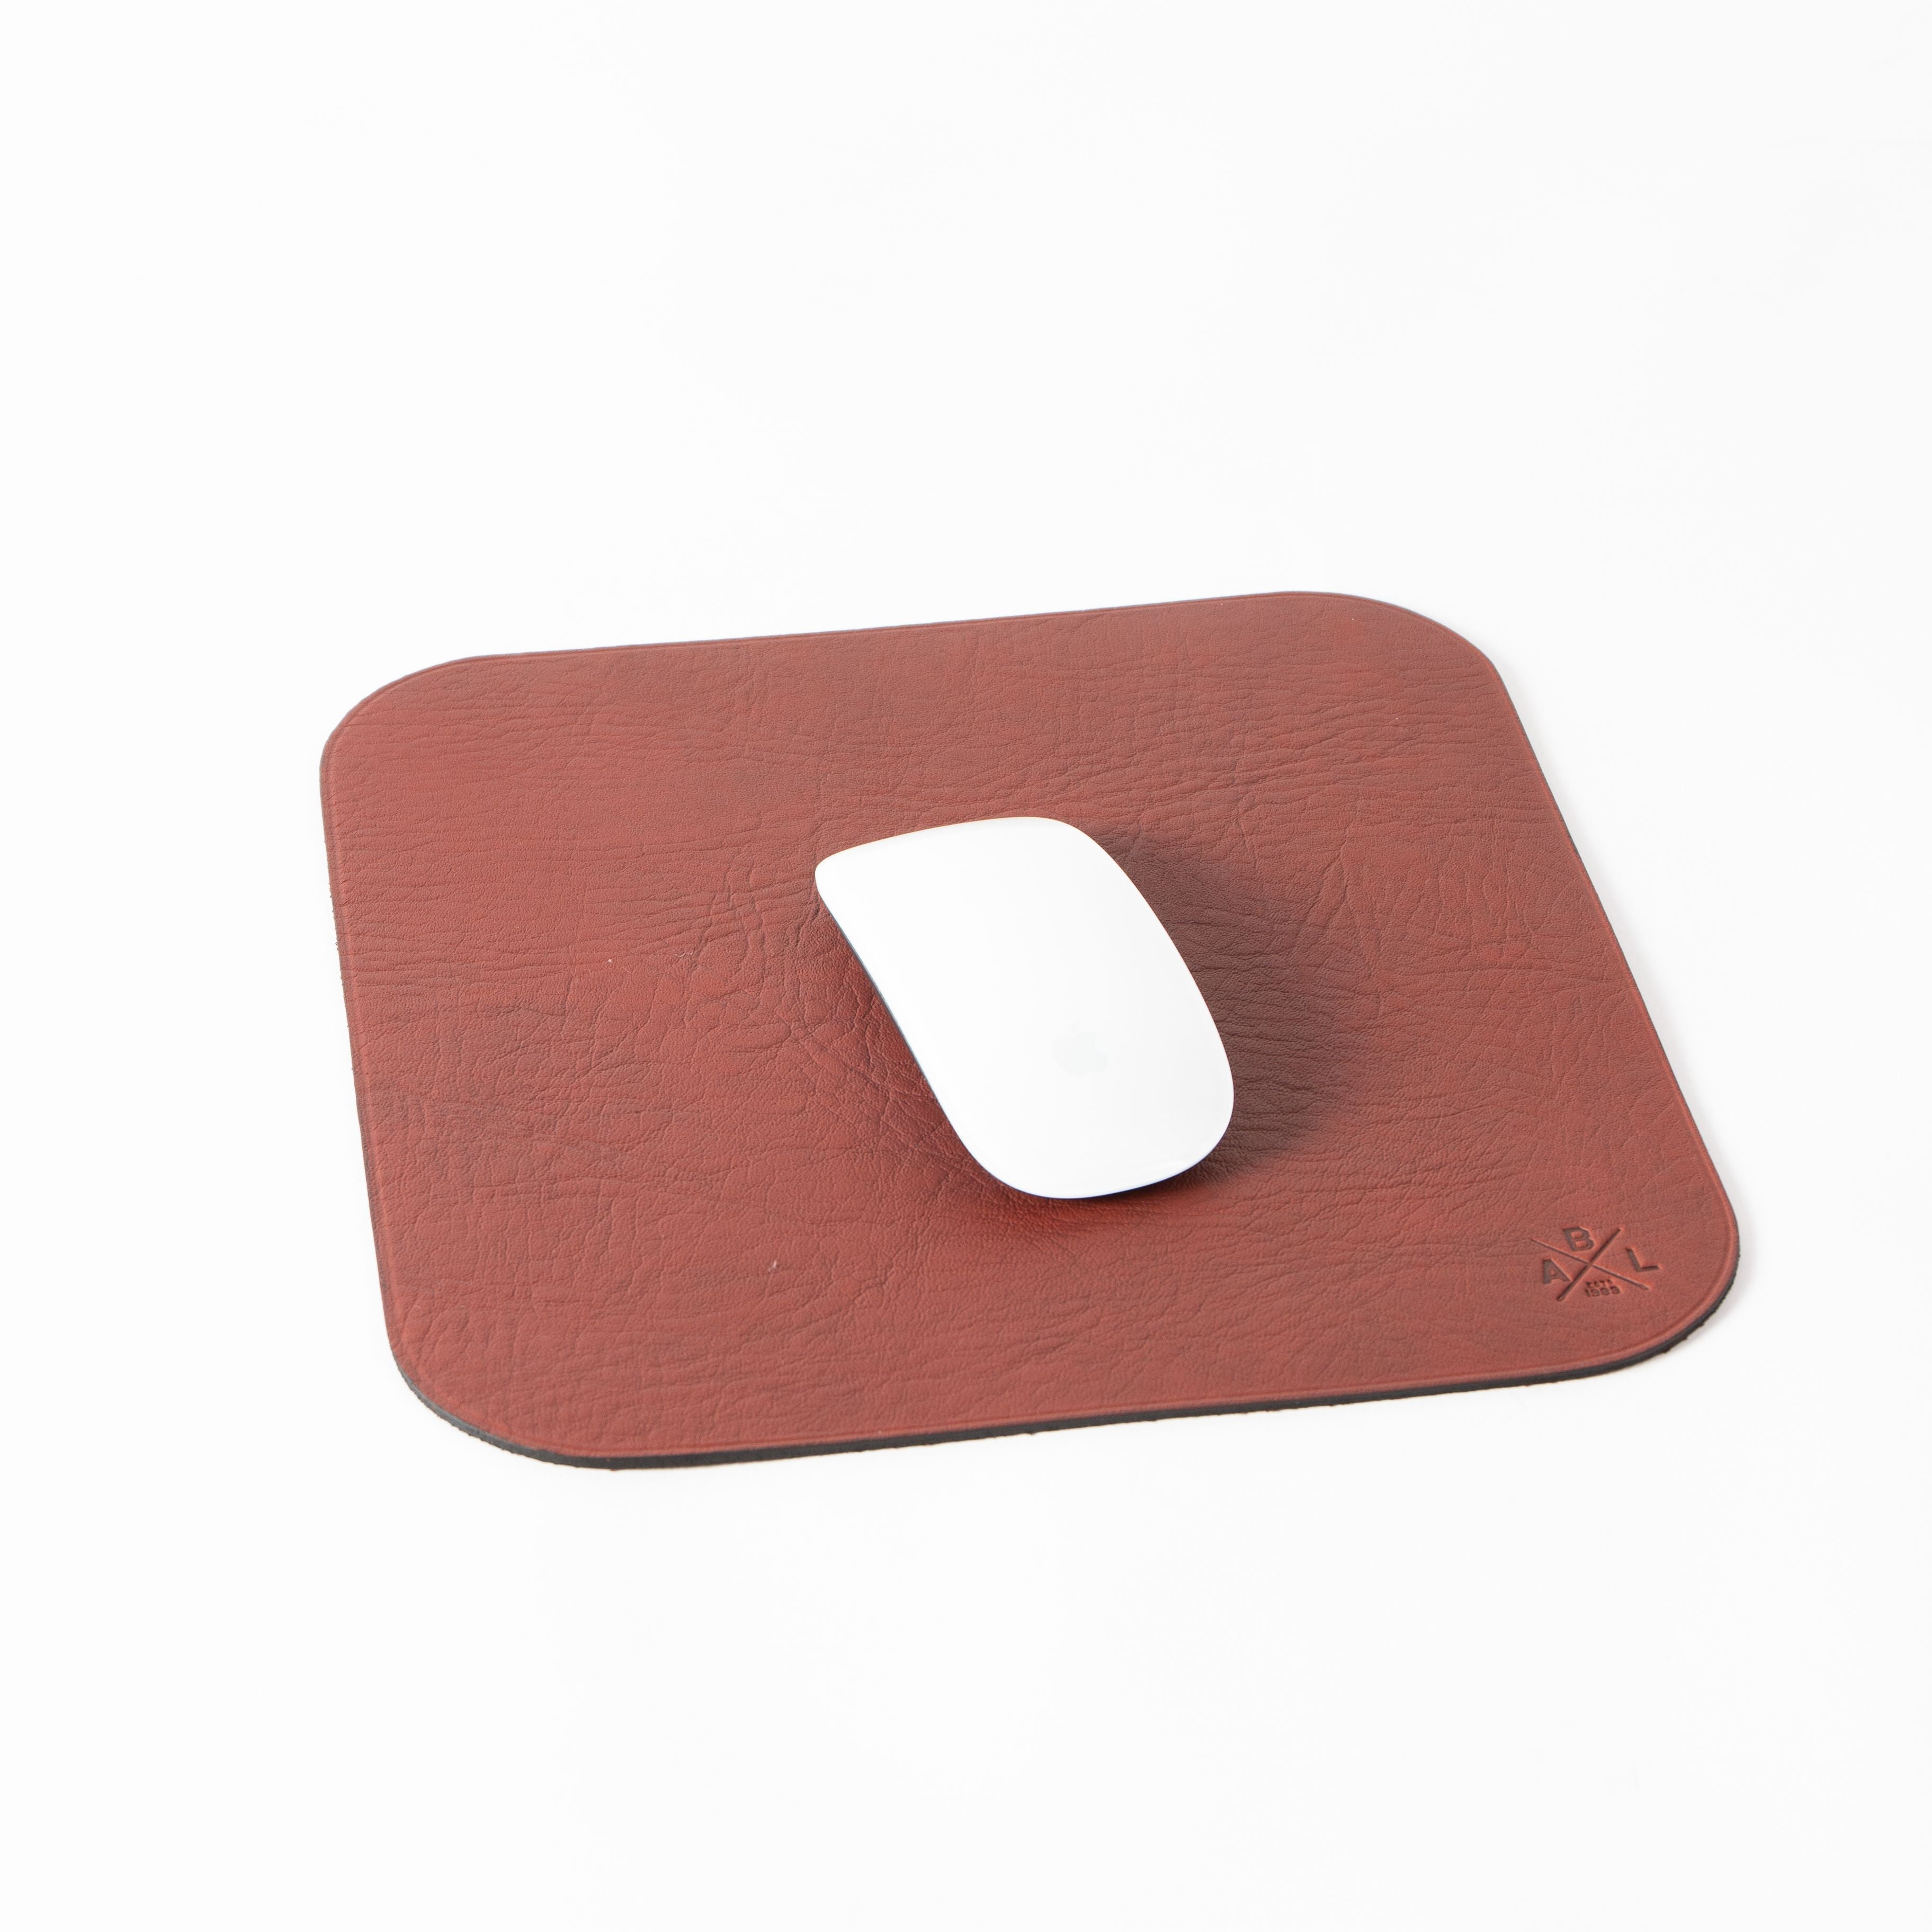 Premium Leather Mouse Pad